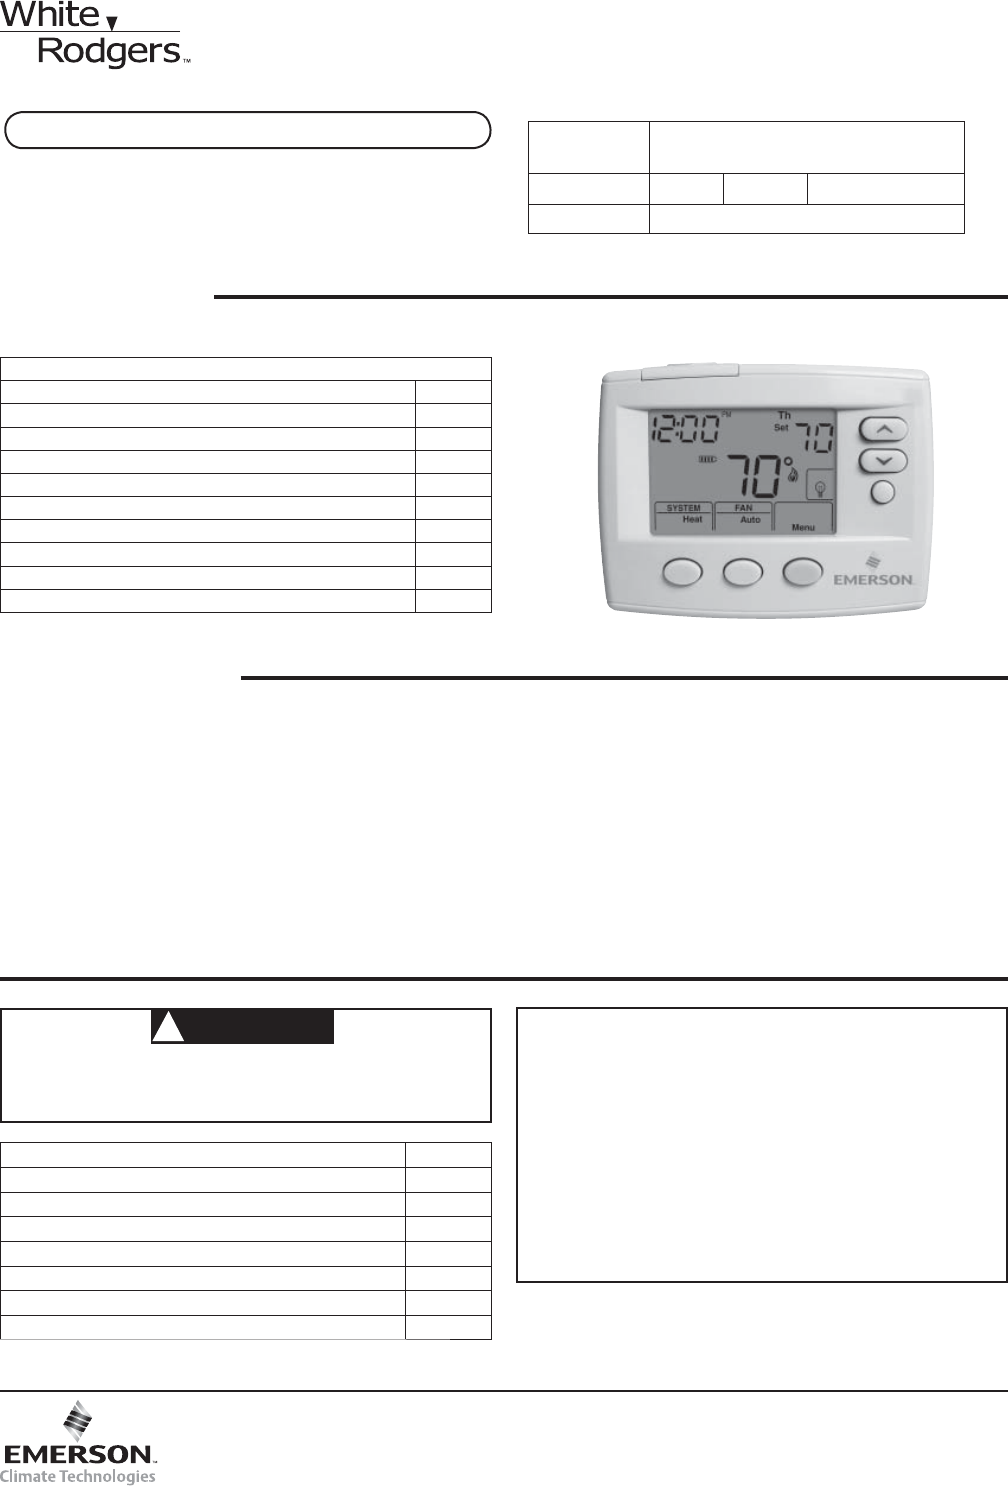 Emerson thermostat manual 1f80-04